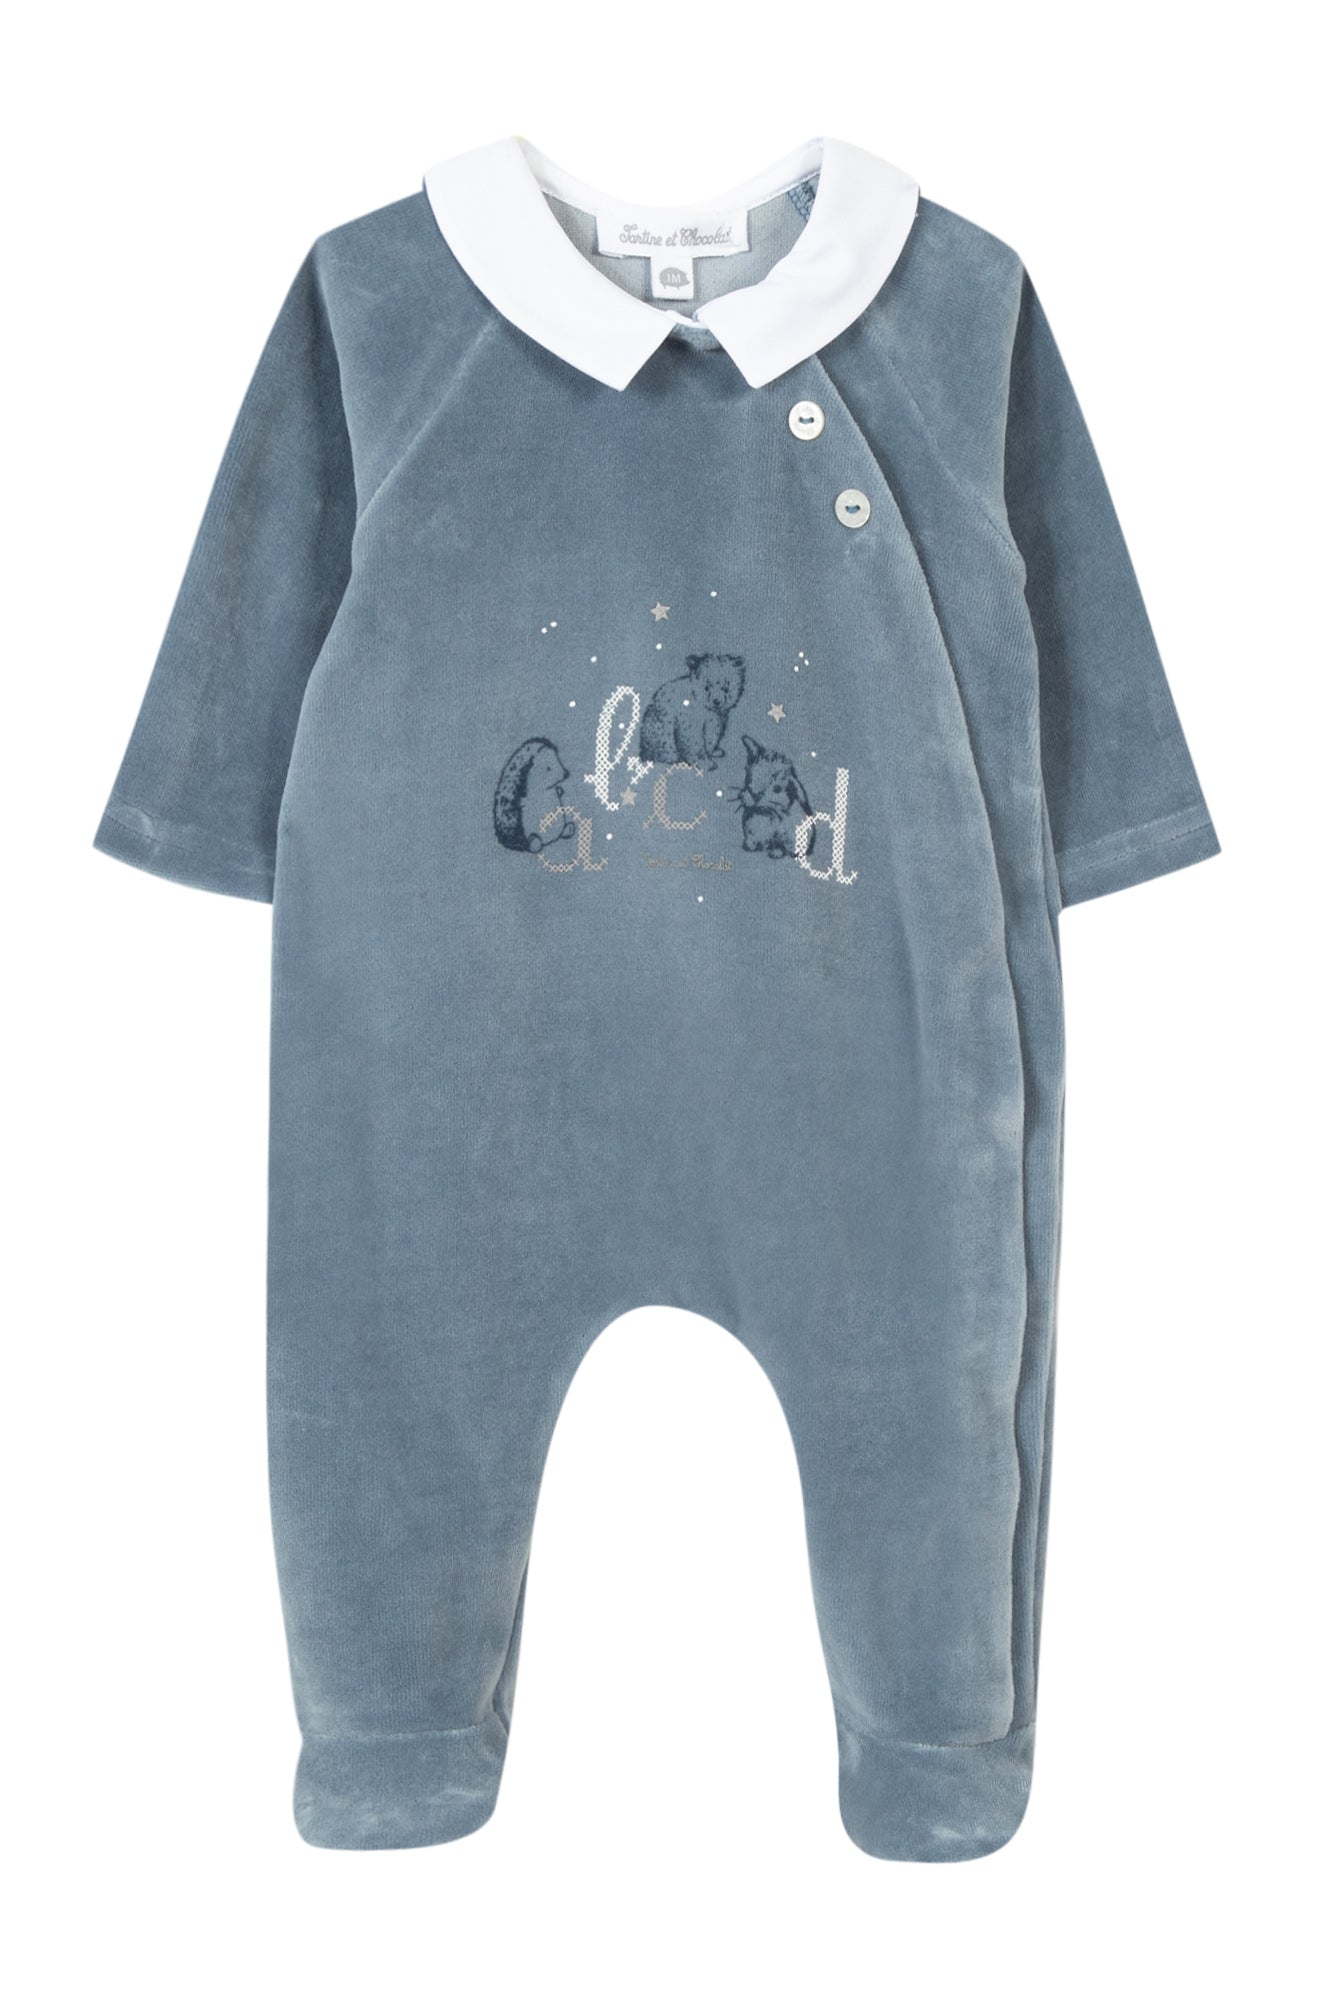 Pyjamas - Blue grey velour with alphabet Gray blue / 3M